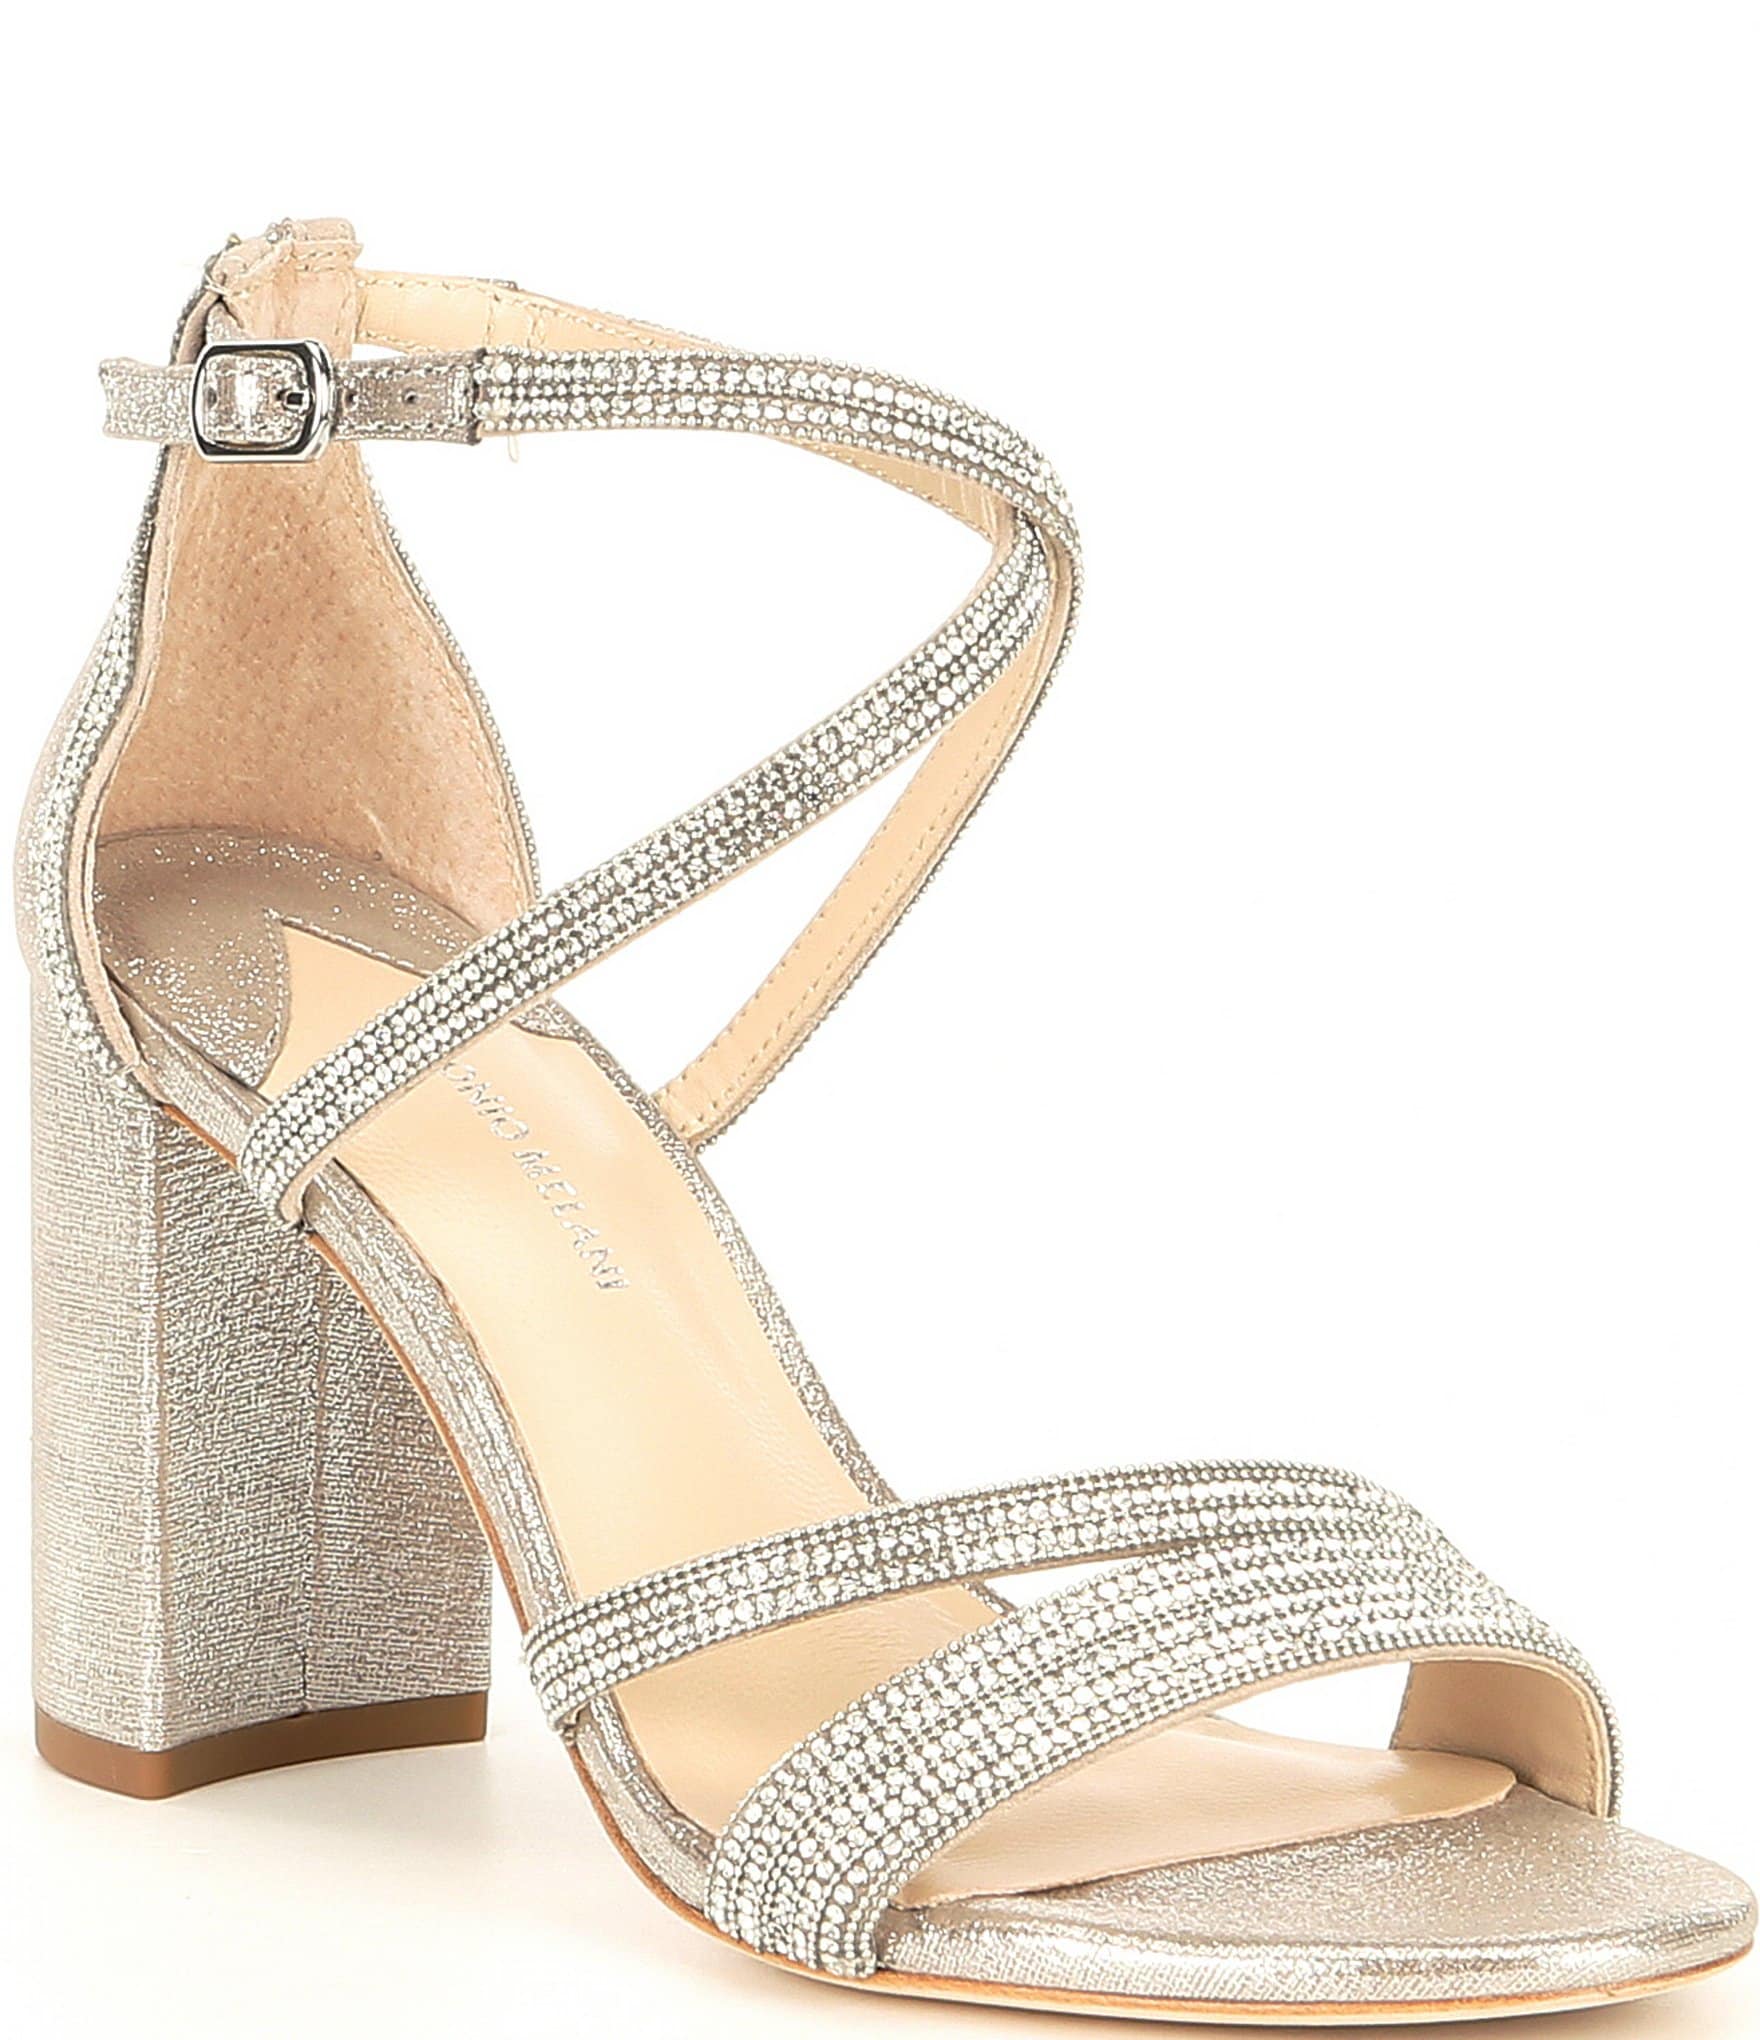 New Look faux suede block heeled sandals in light gray | ASOS